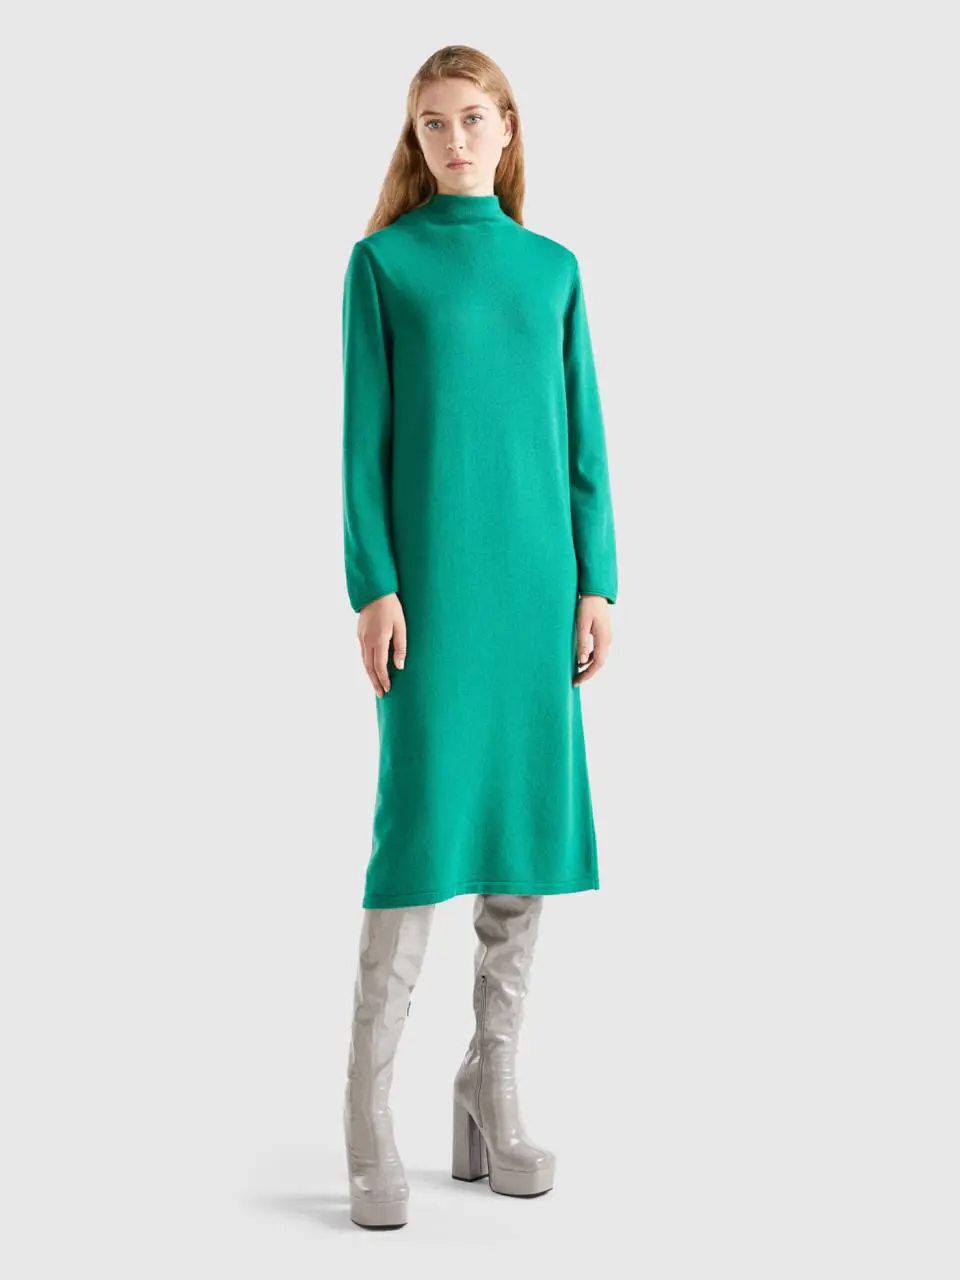 Benetton cashmere blend midi dress. 1